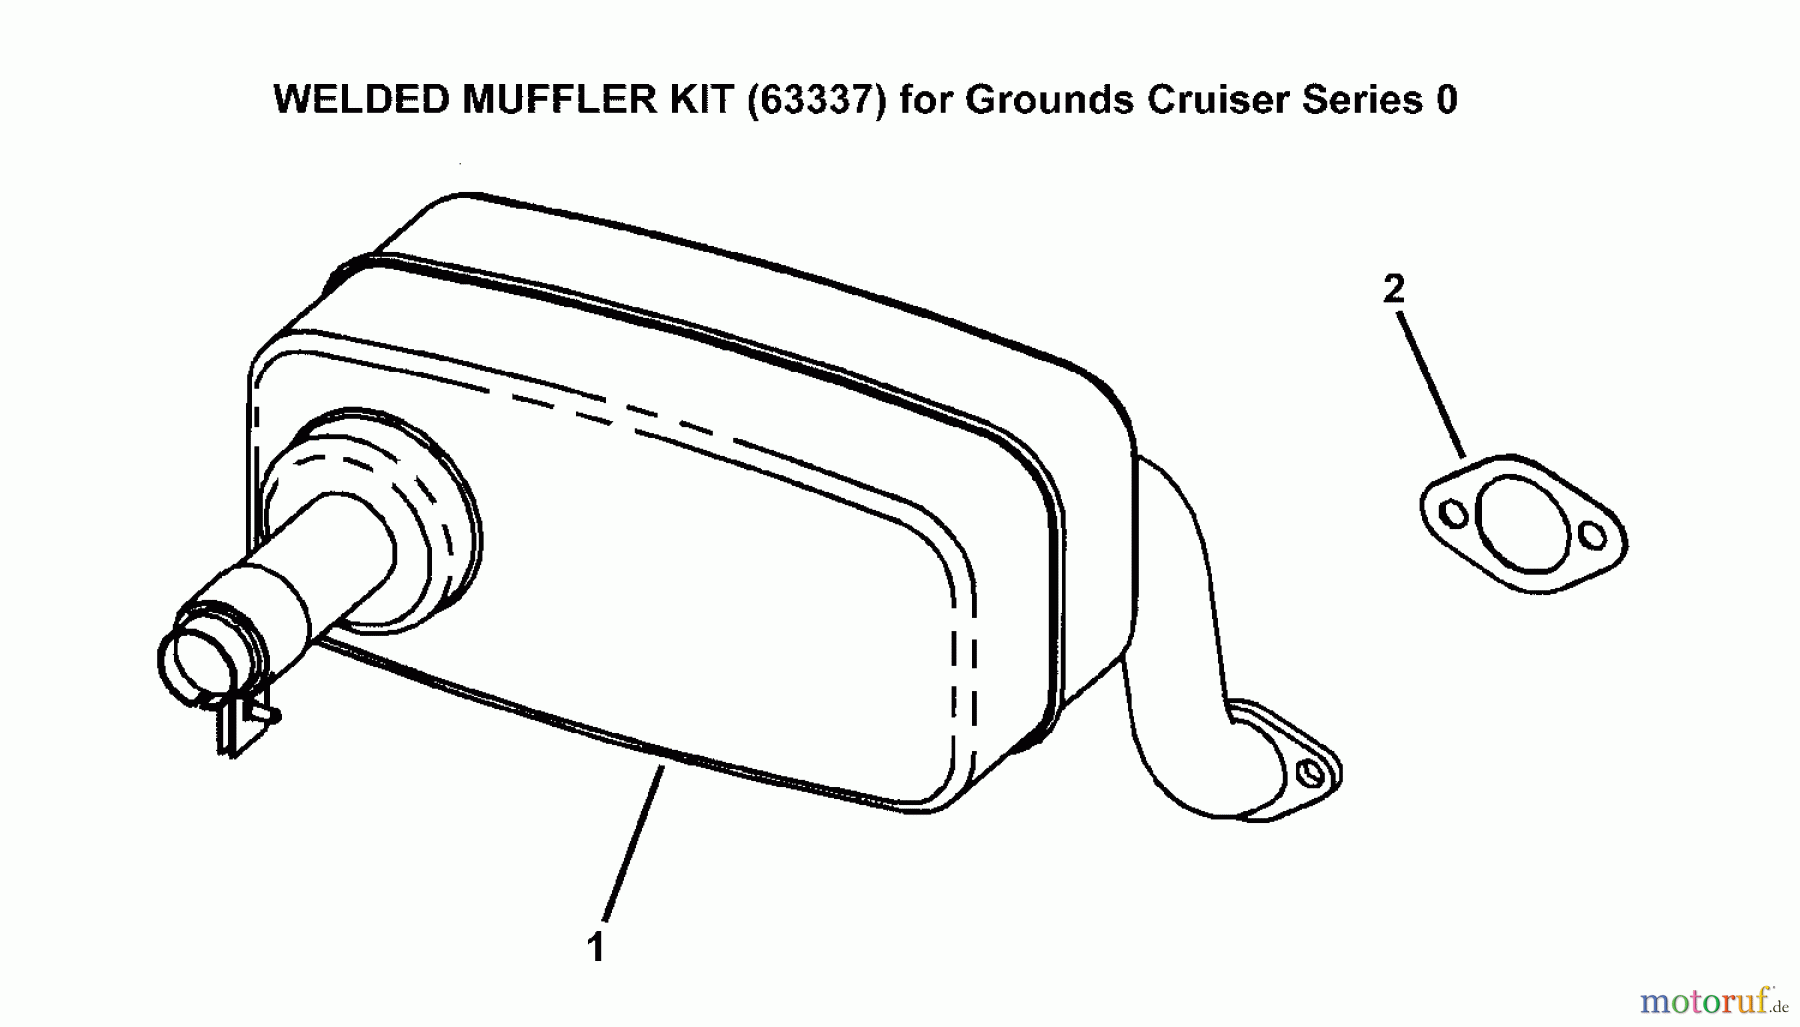  Snapper Zubehör, Utility Vehicle 7063337 - Snapper Utility Vehicle Muffler Grounds Cruiser Muffler Kit